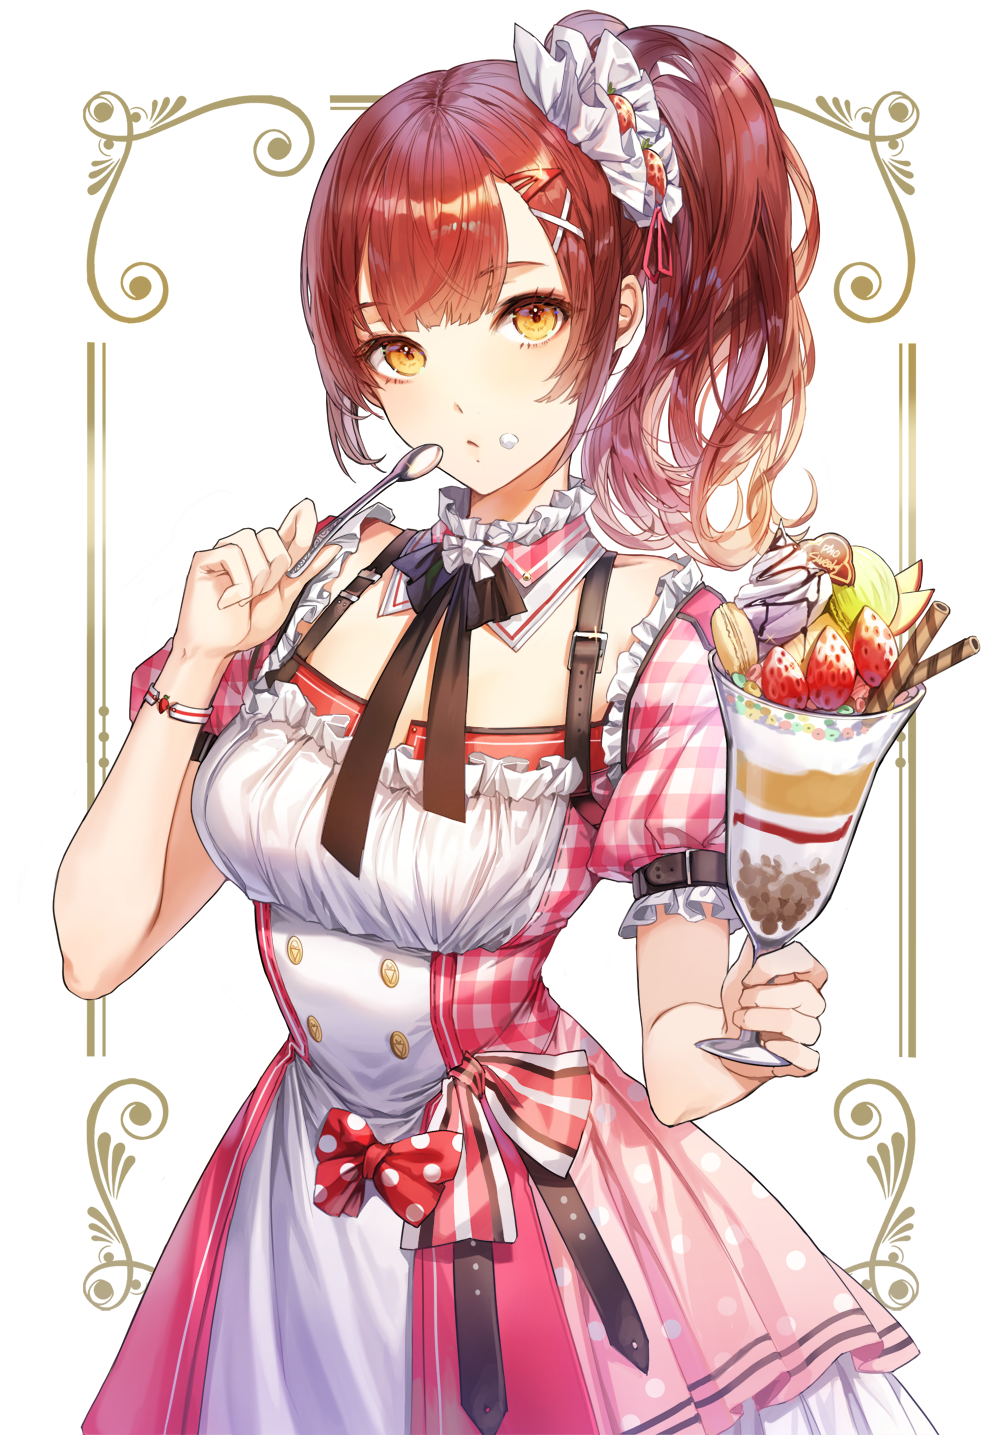 Anime 1000x1435 anime anime girls digital art artwork 2D portrait display brunette side ponytail brown eyes maid outfit waitress ice cream EB+